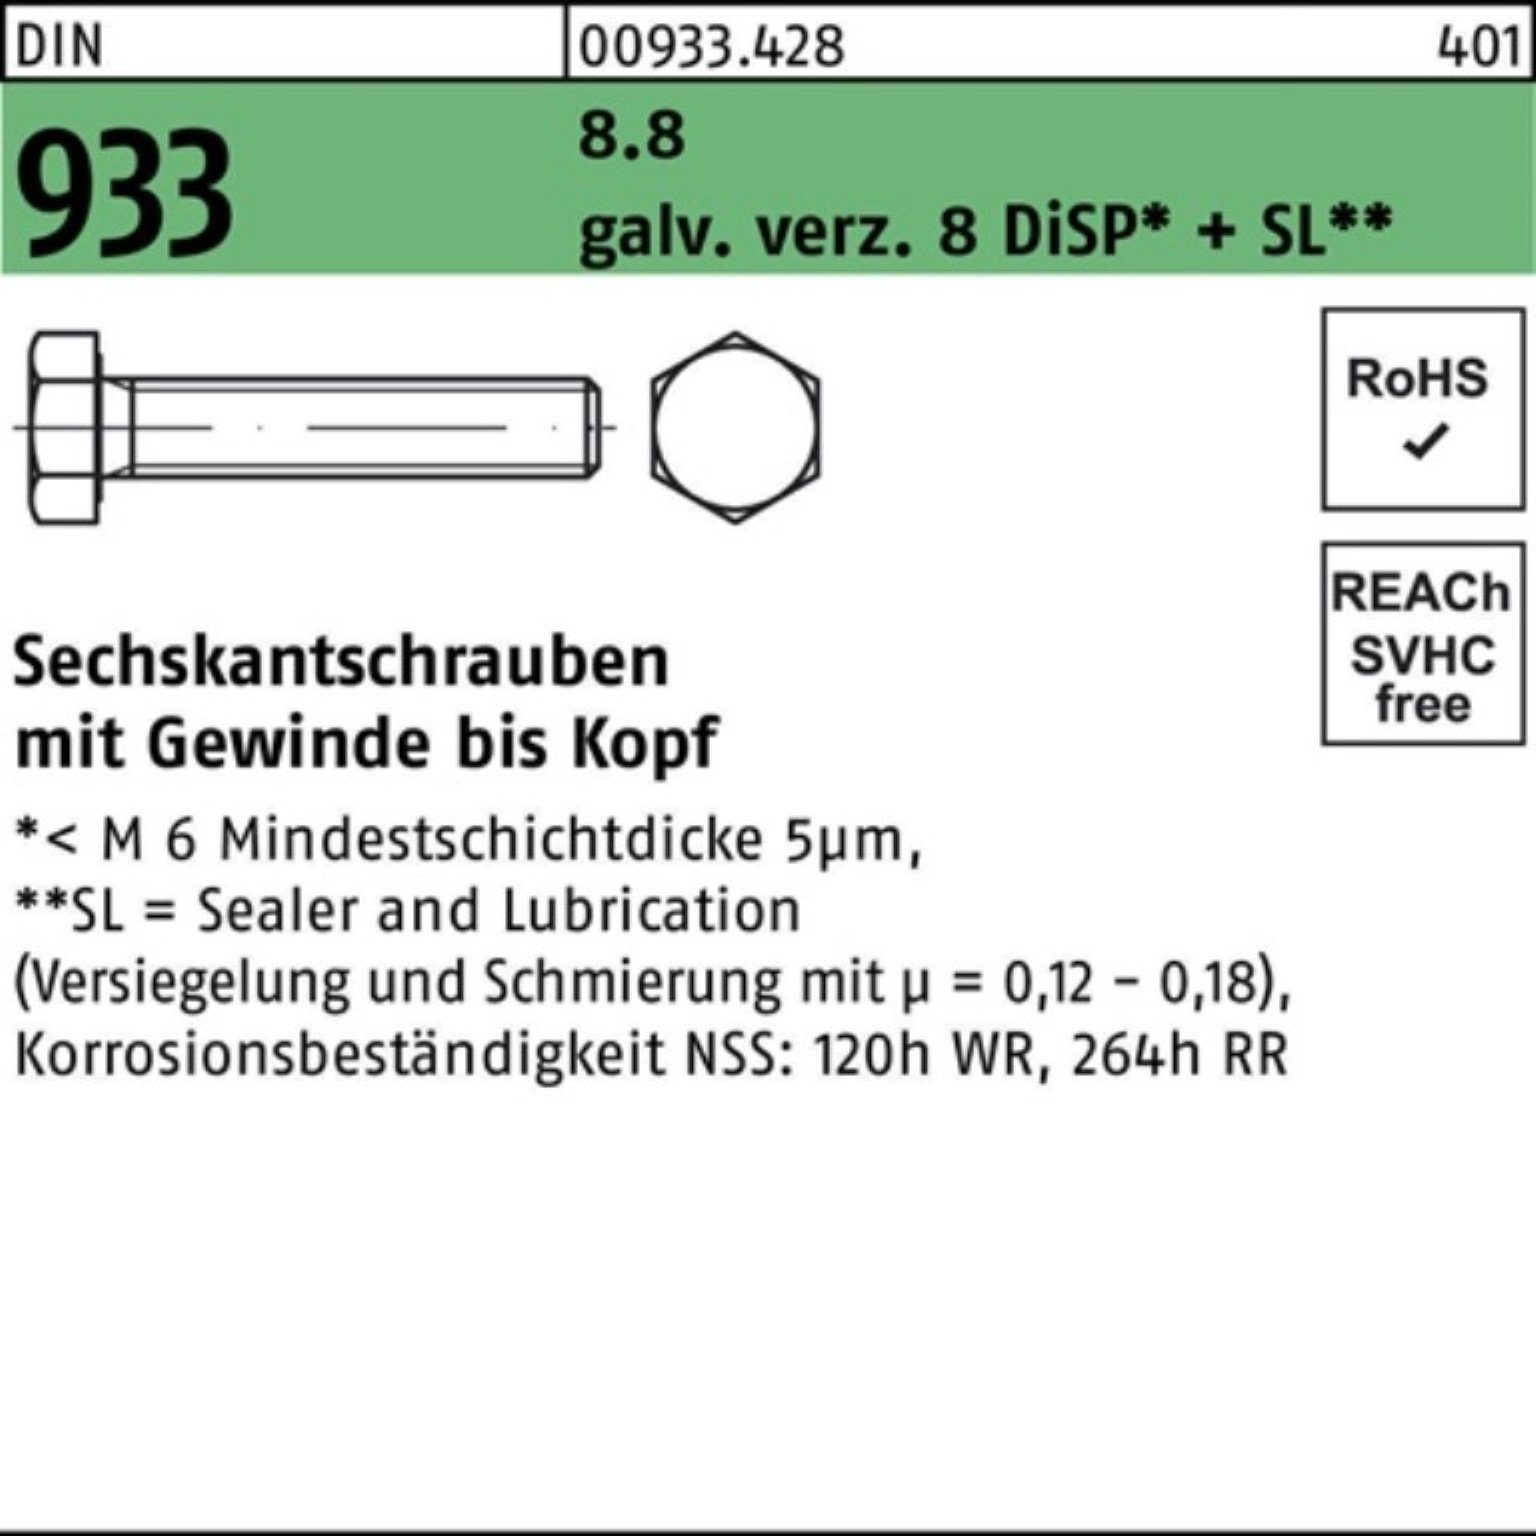 Sechskantschraube Sechskantschraube 200er DiSP Pack 8.8 Zn gal 933 SL 20 M5x DIN Reyher VG + 35